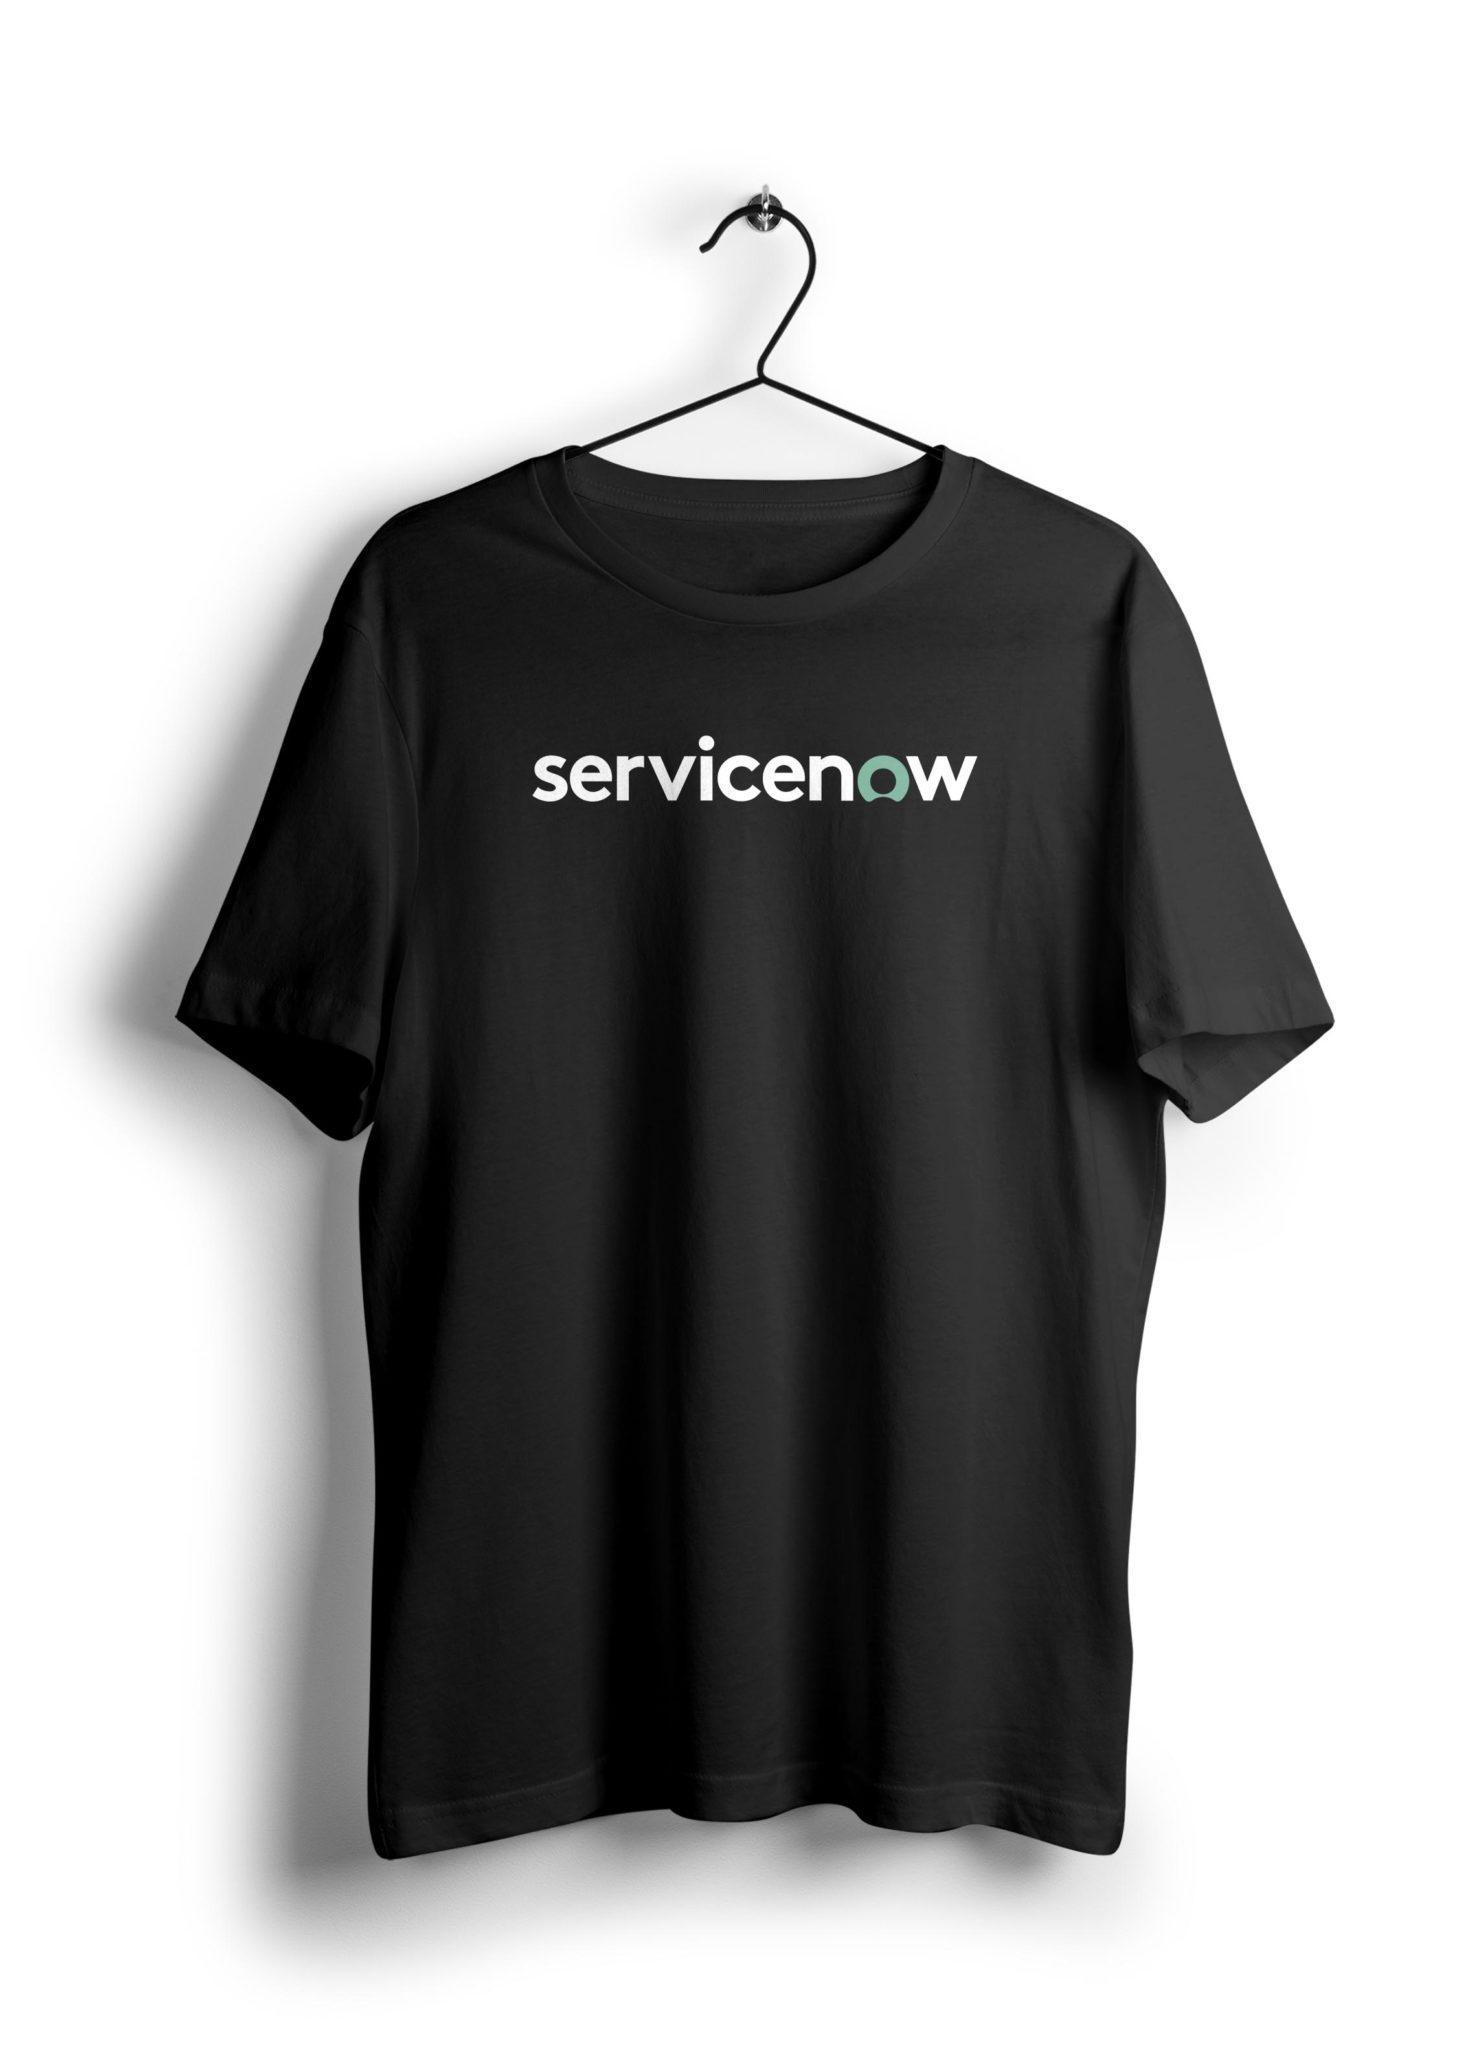 Servicenow Unisex Half Sleeve T Shirt CrazyMonk